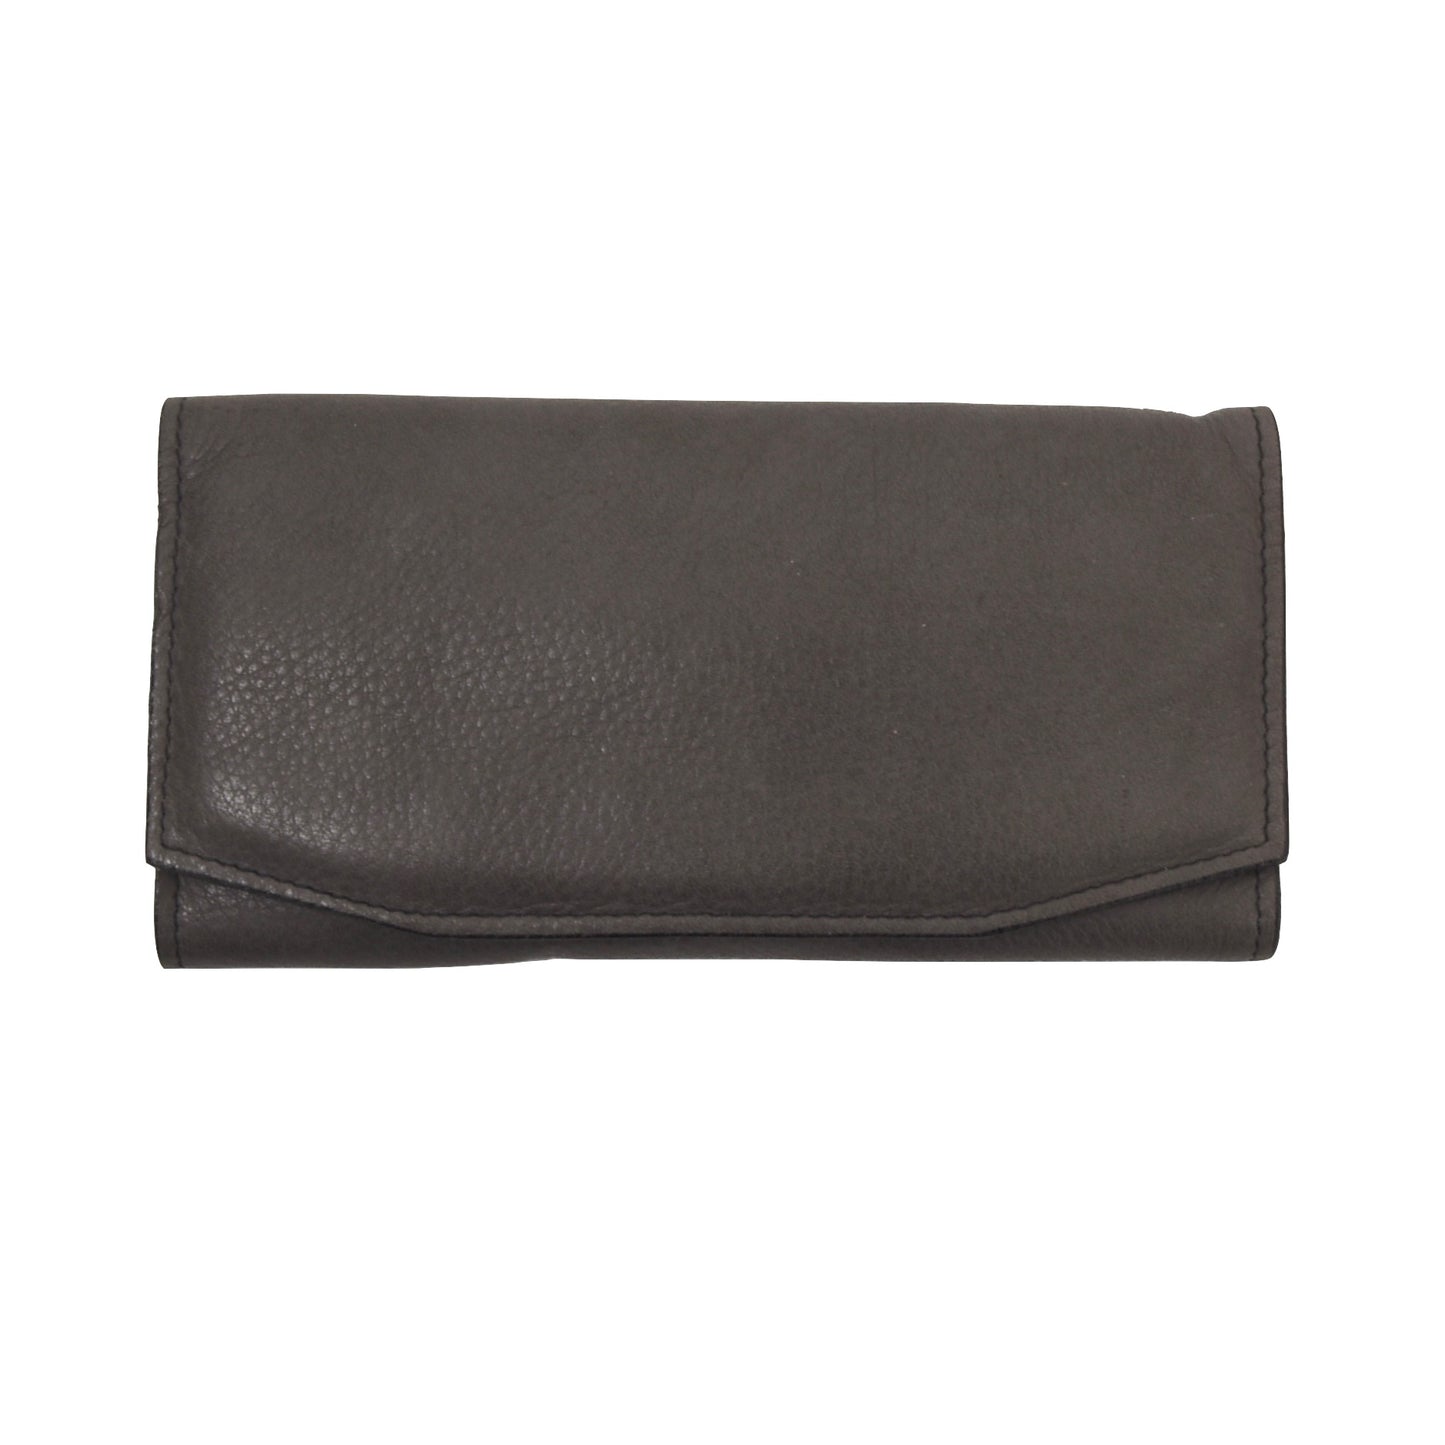 Niegeloh Topinox 4 Piece Manicure Set + Leather Case